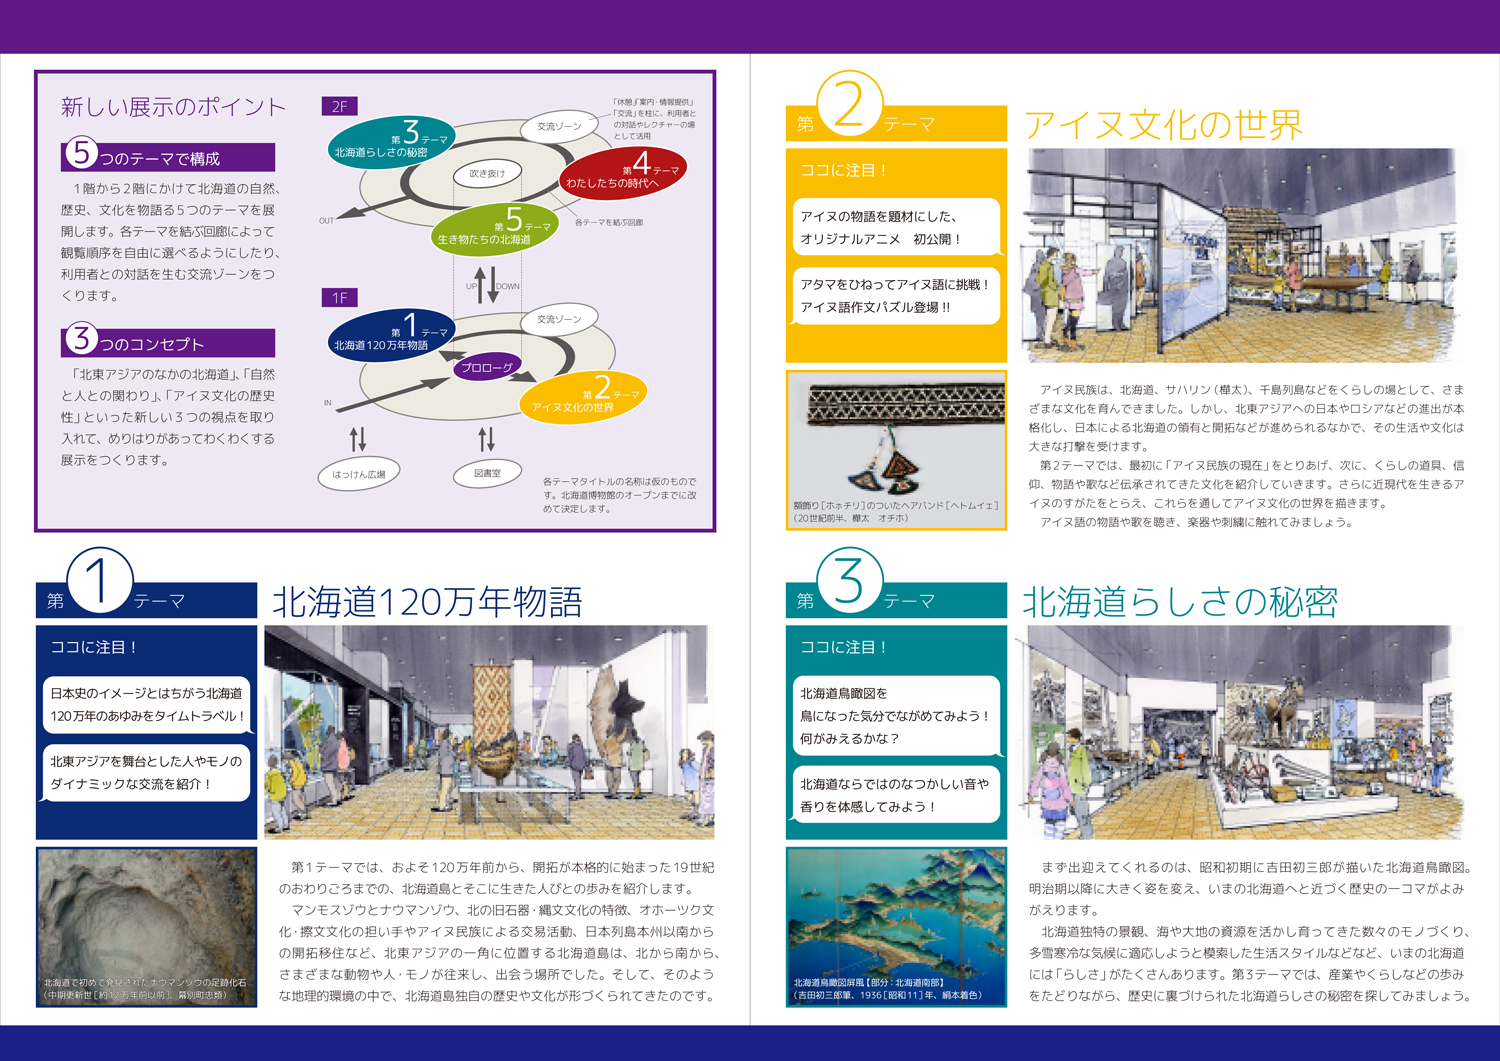 http://www.recruit-hokkaido-jalan.jp/news_sapporo/HP%E7%94%A8hokkaidomuseum2.jpg